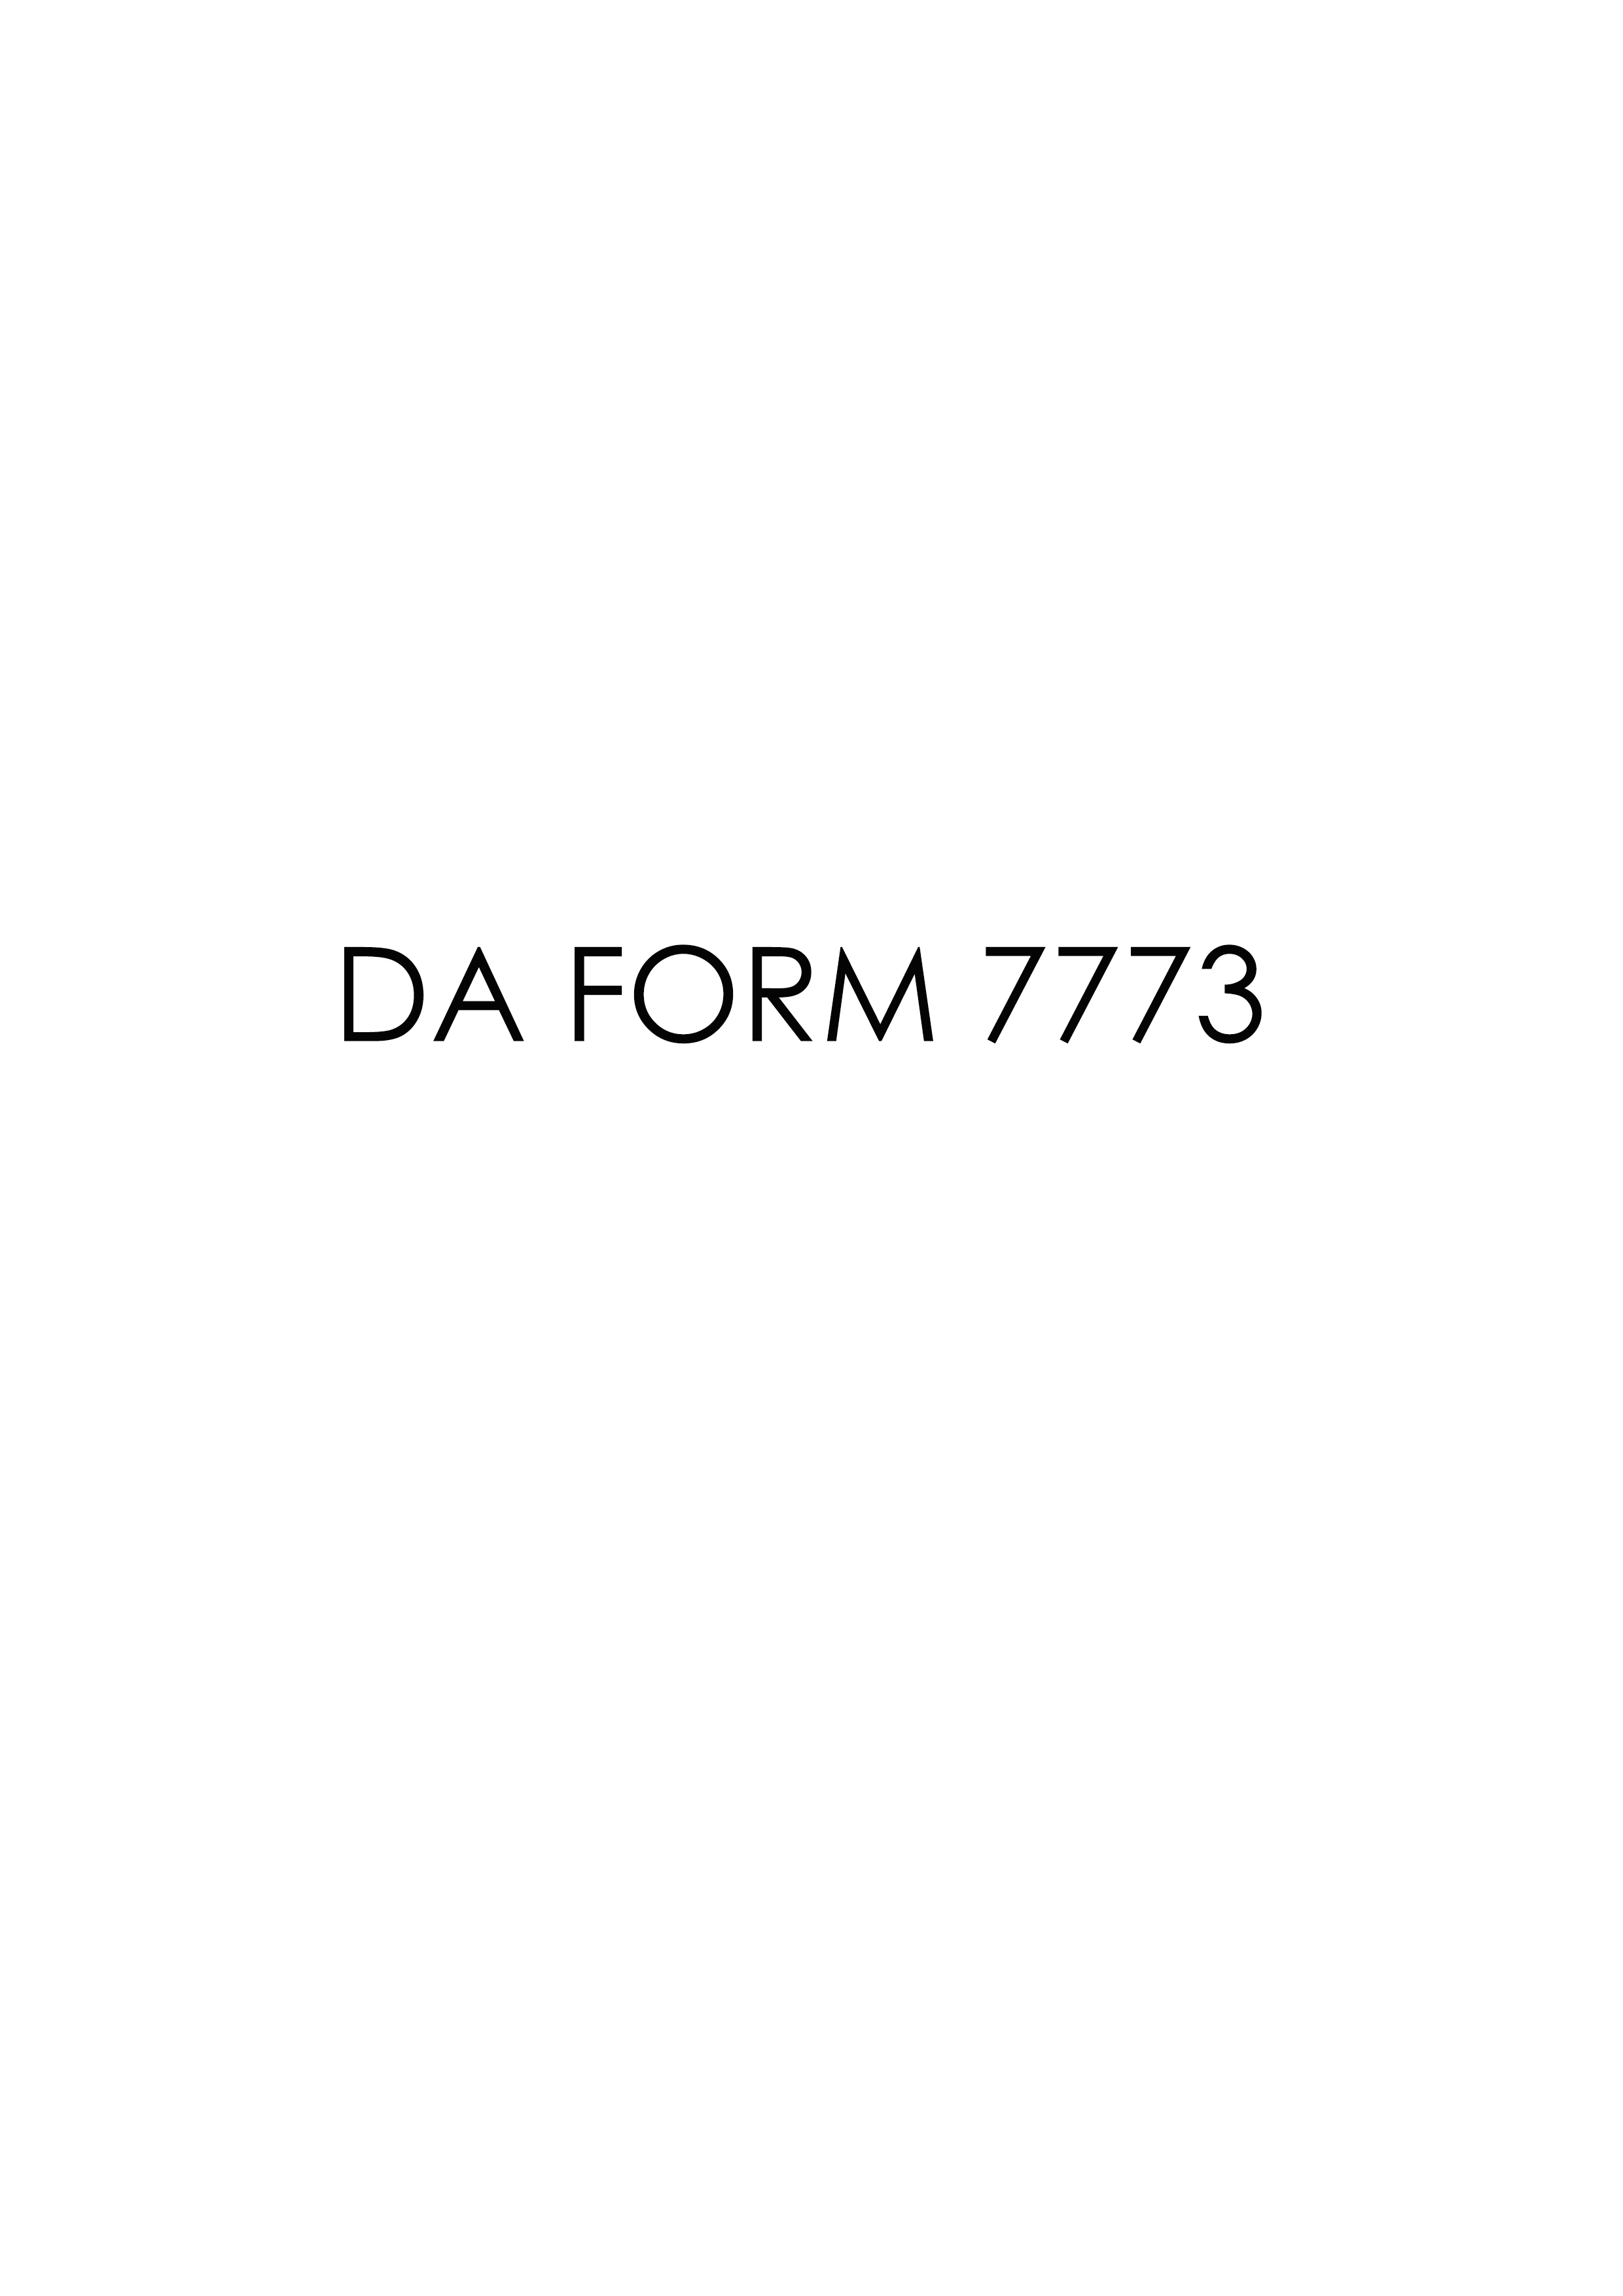 Download da form 7773